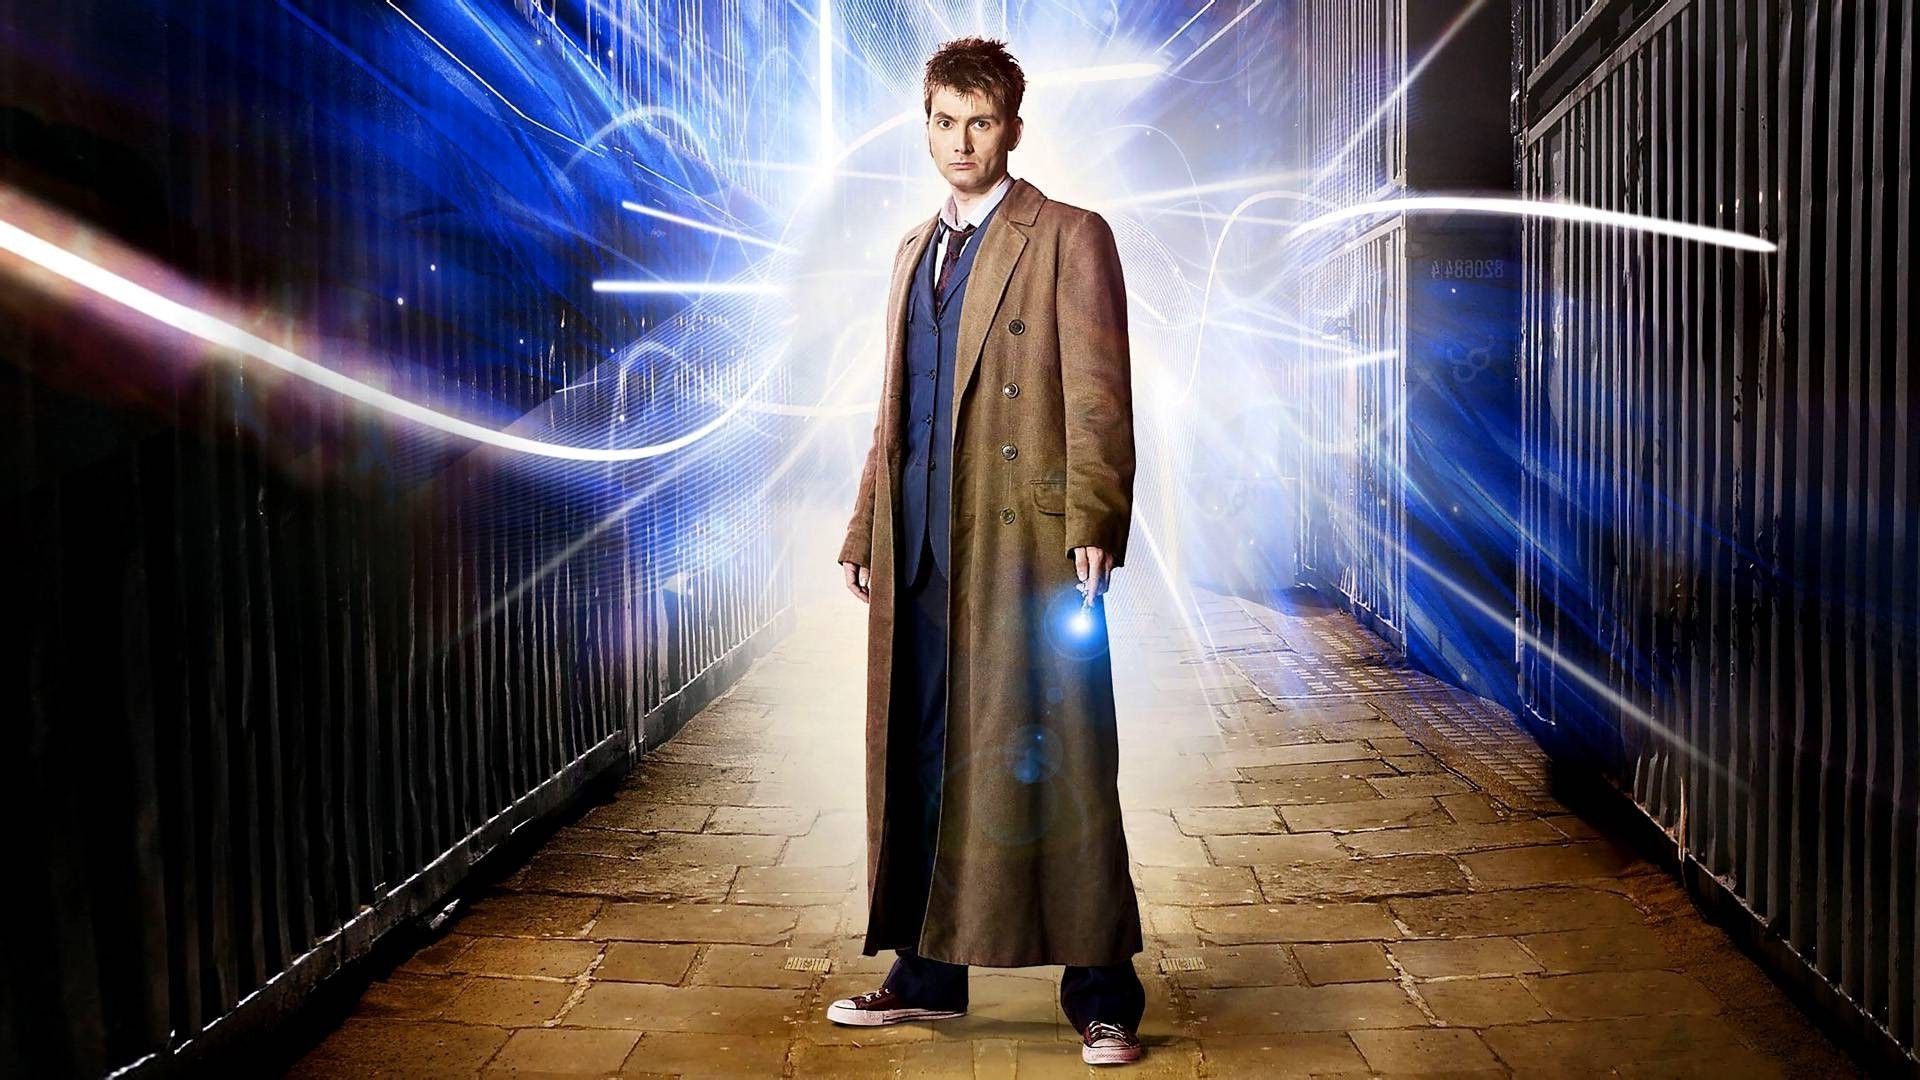 Doctor Who, The Doctor, Tardis, David Tennant, Tenth - Doctor Who Wallpaper David Tennant - HD Wallpaper 